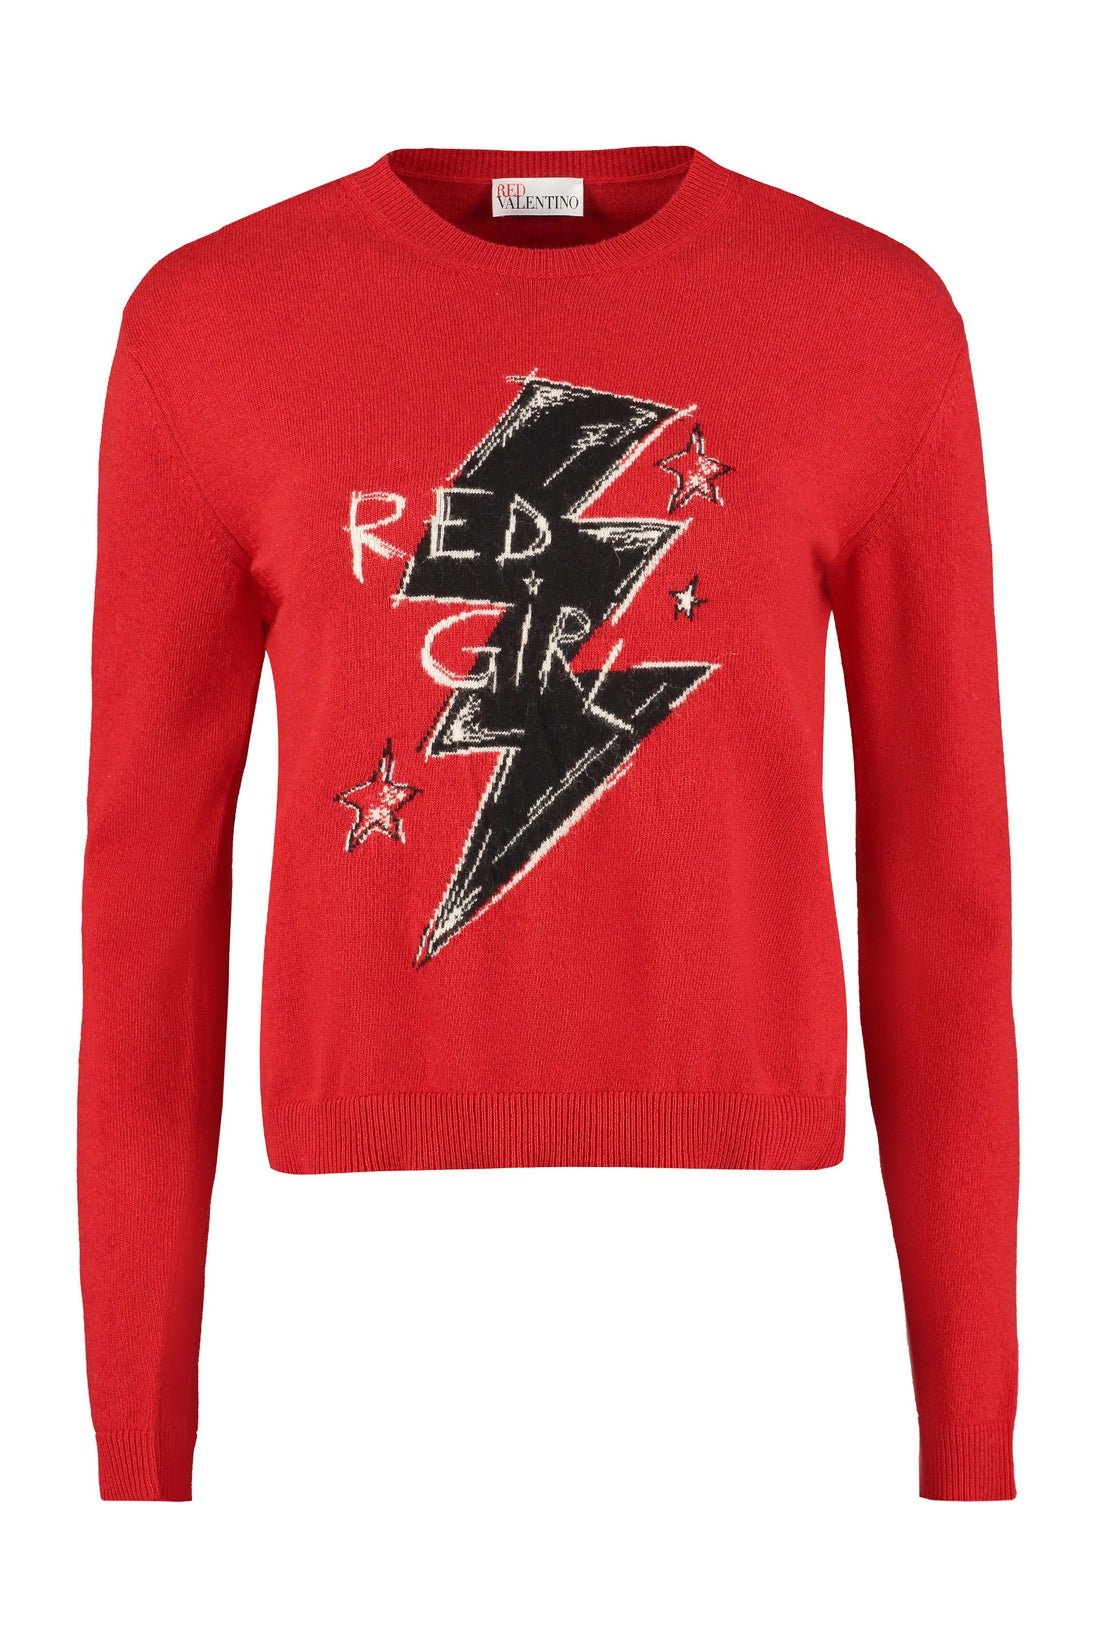 RED VALENTINO-OUTLET-SALE-Intarsia crew-neck sweater-ARCHIVIST